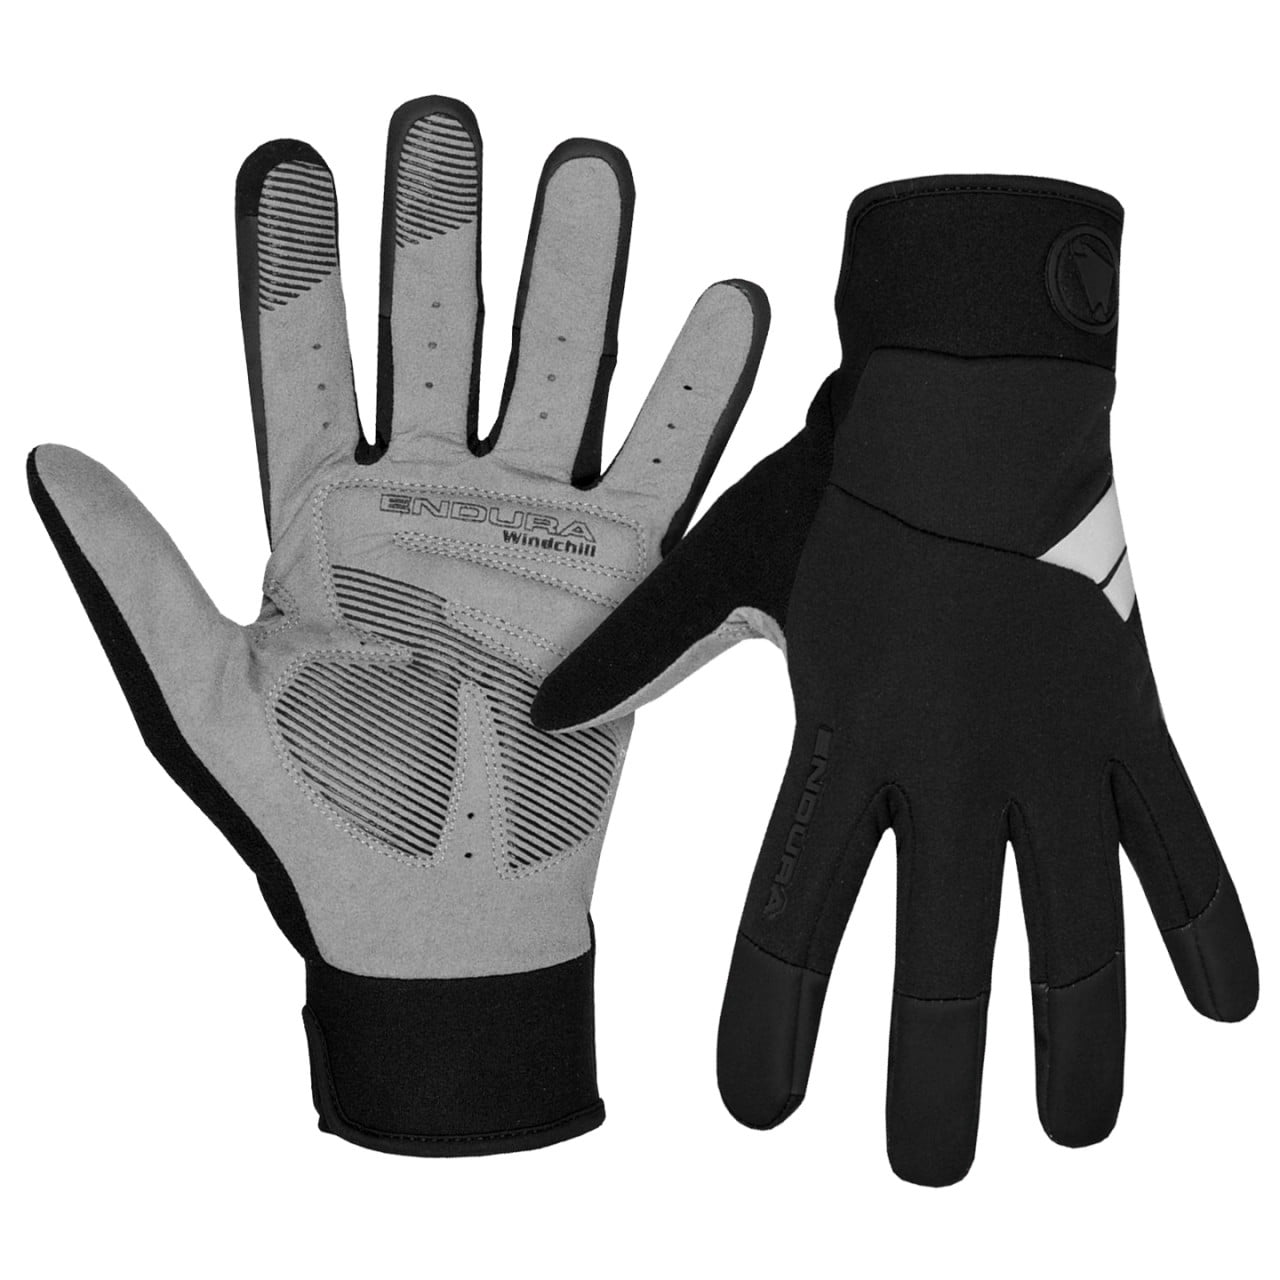 Windchill Winter Gloves